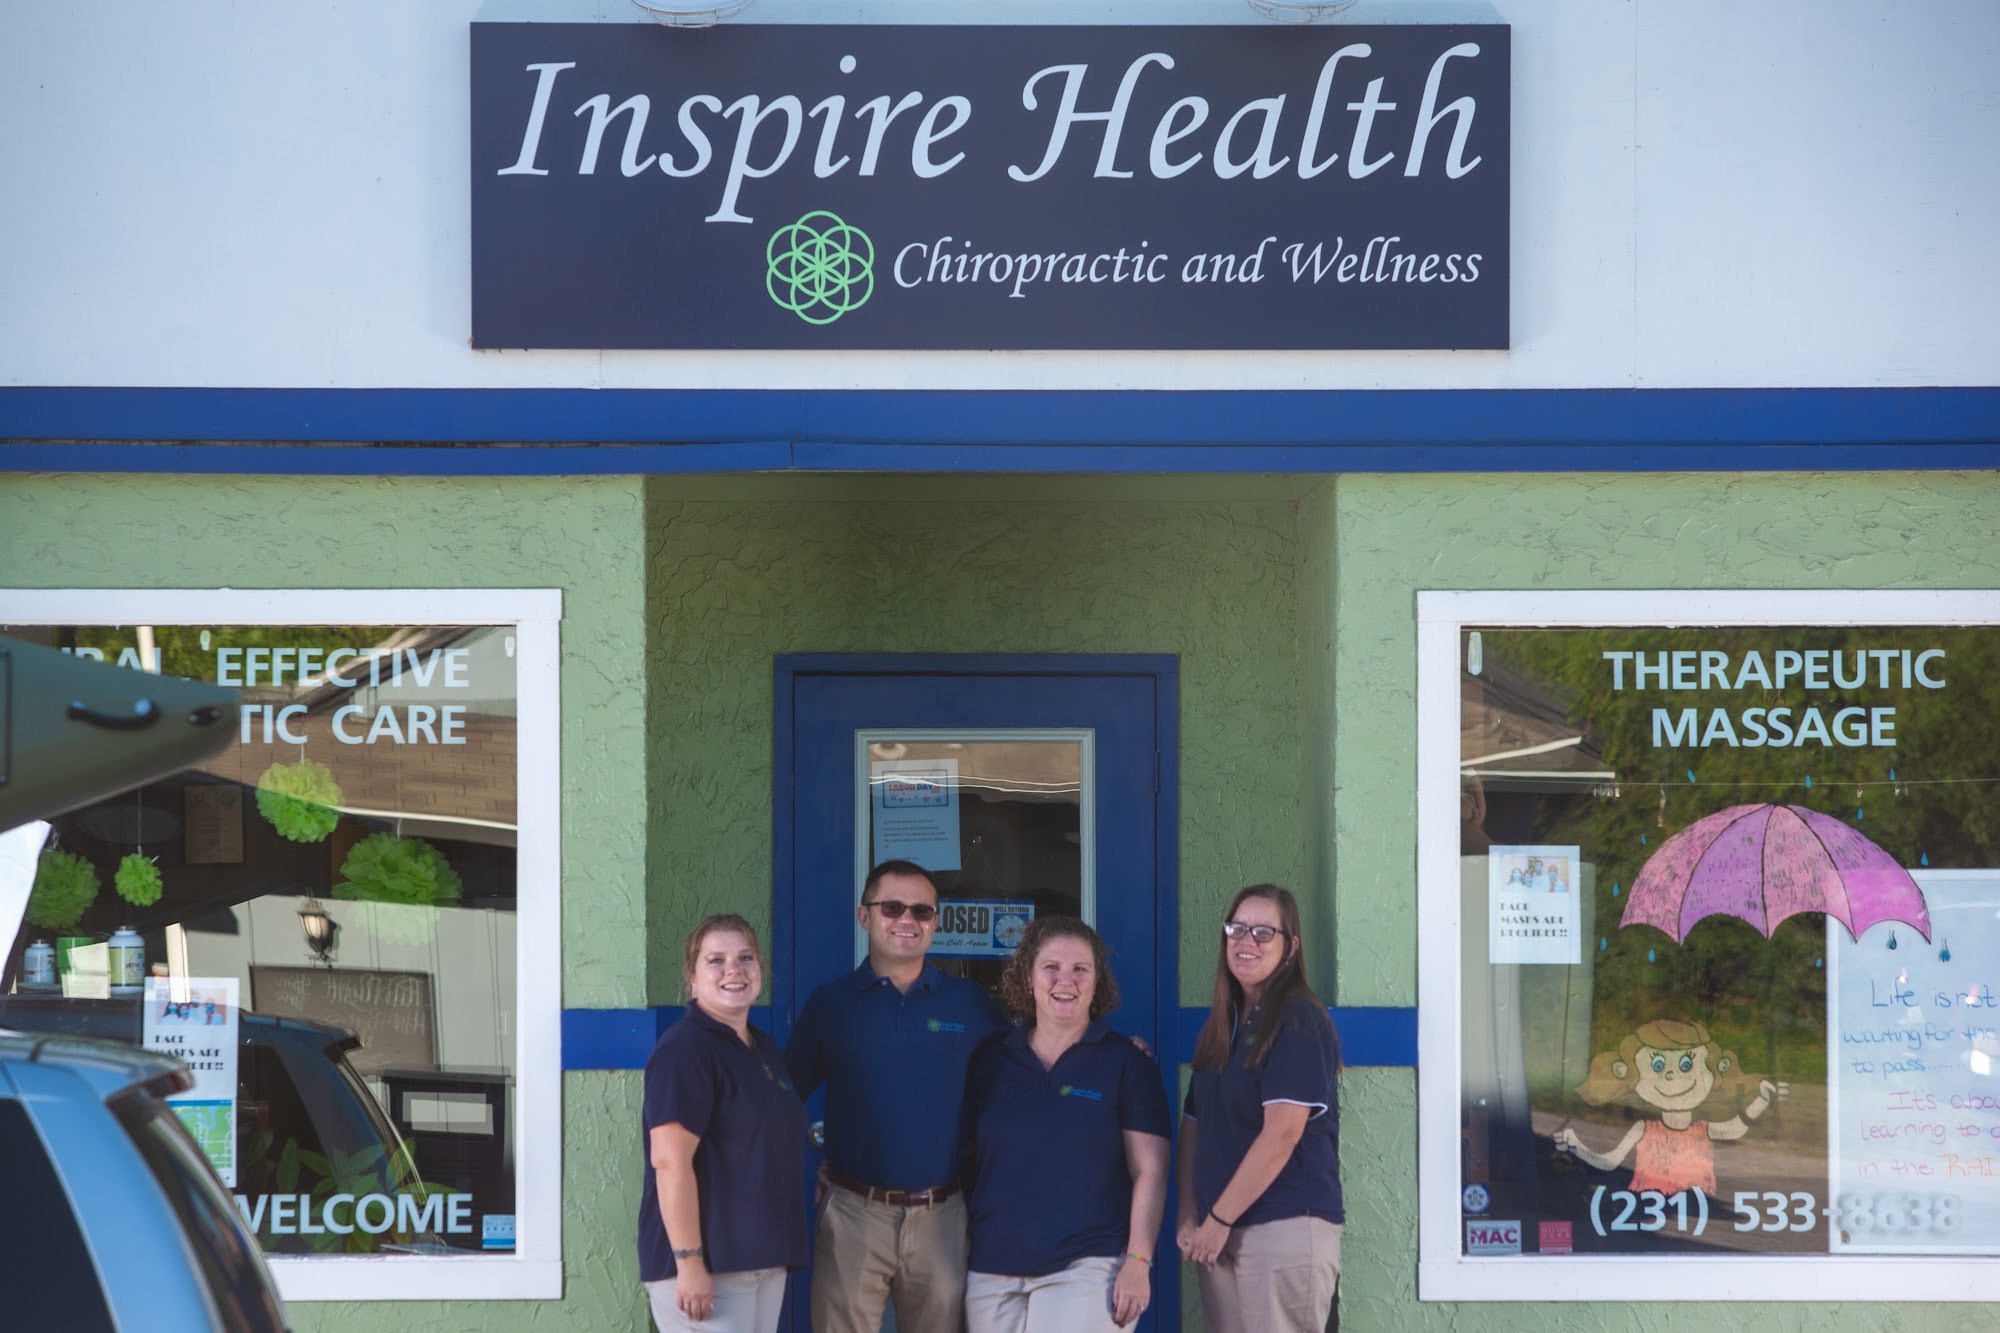 Inspire Health Chiropractic and Wellness 219 N Bridge St, Bellaire Michigan 49615